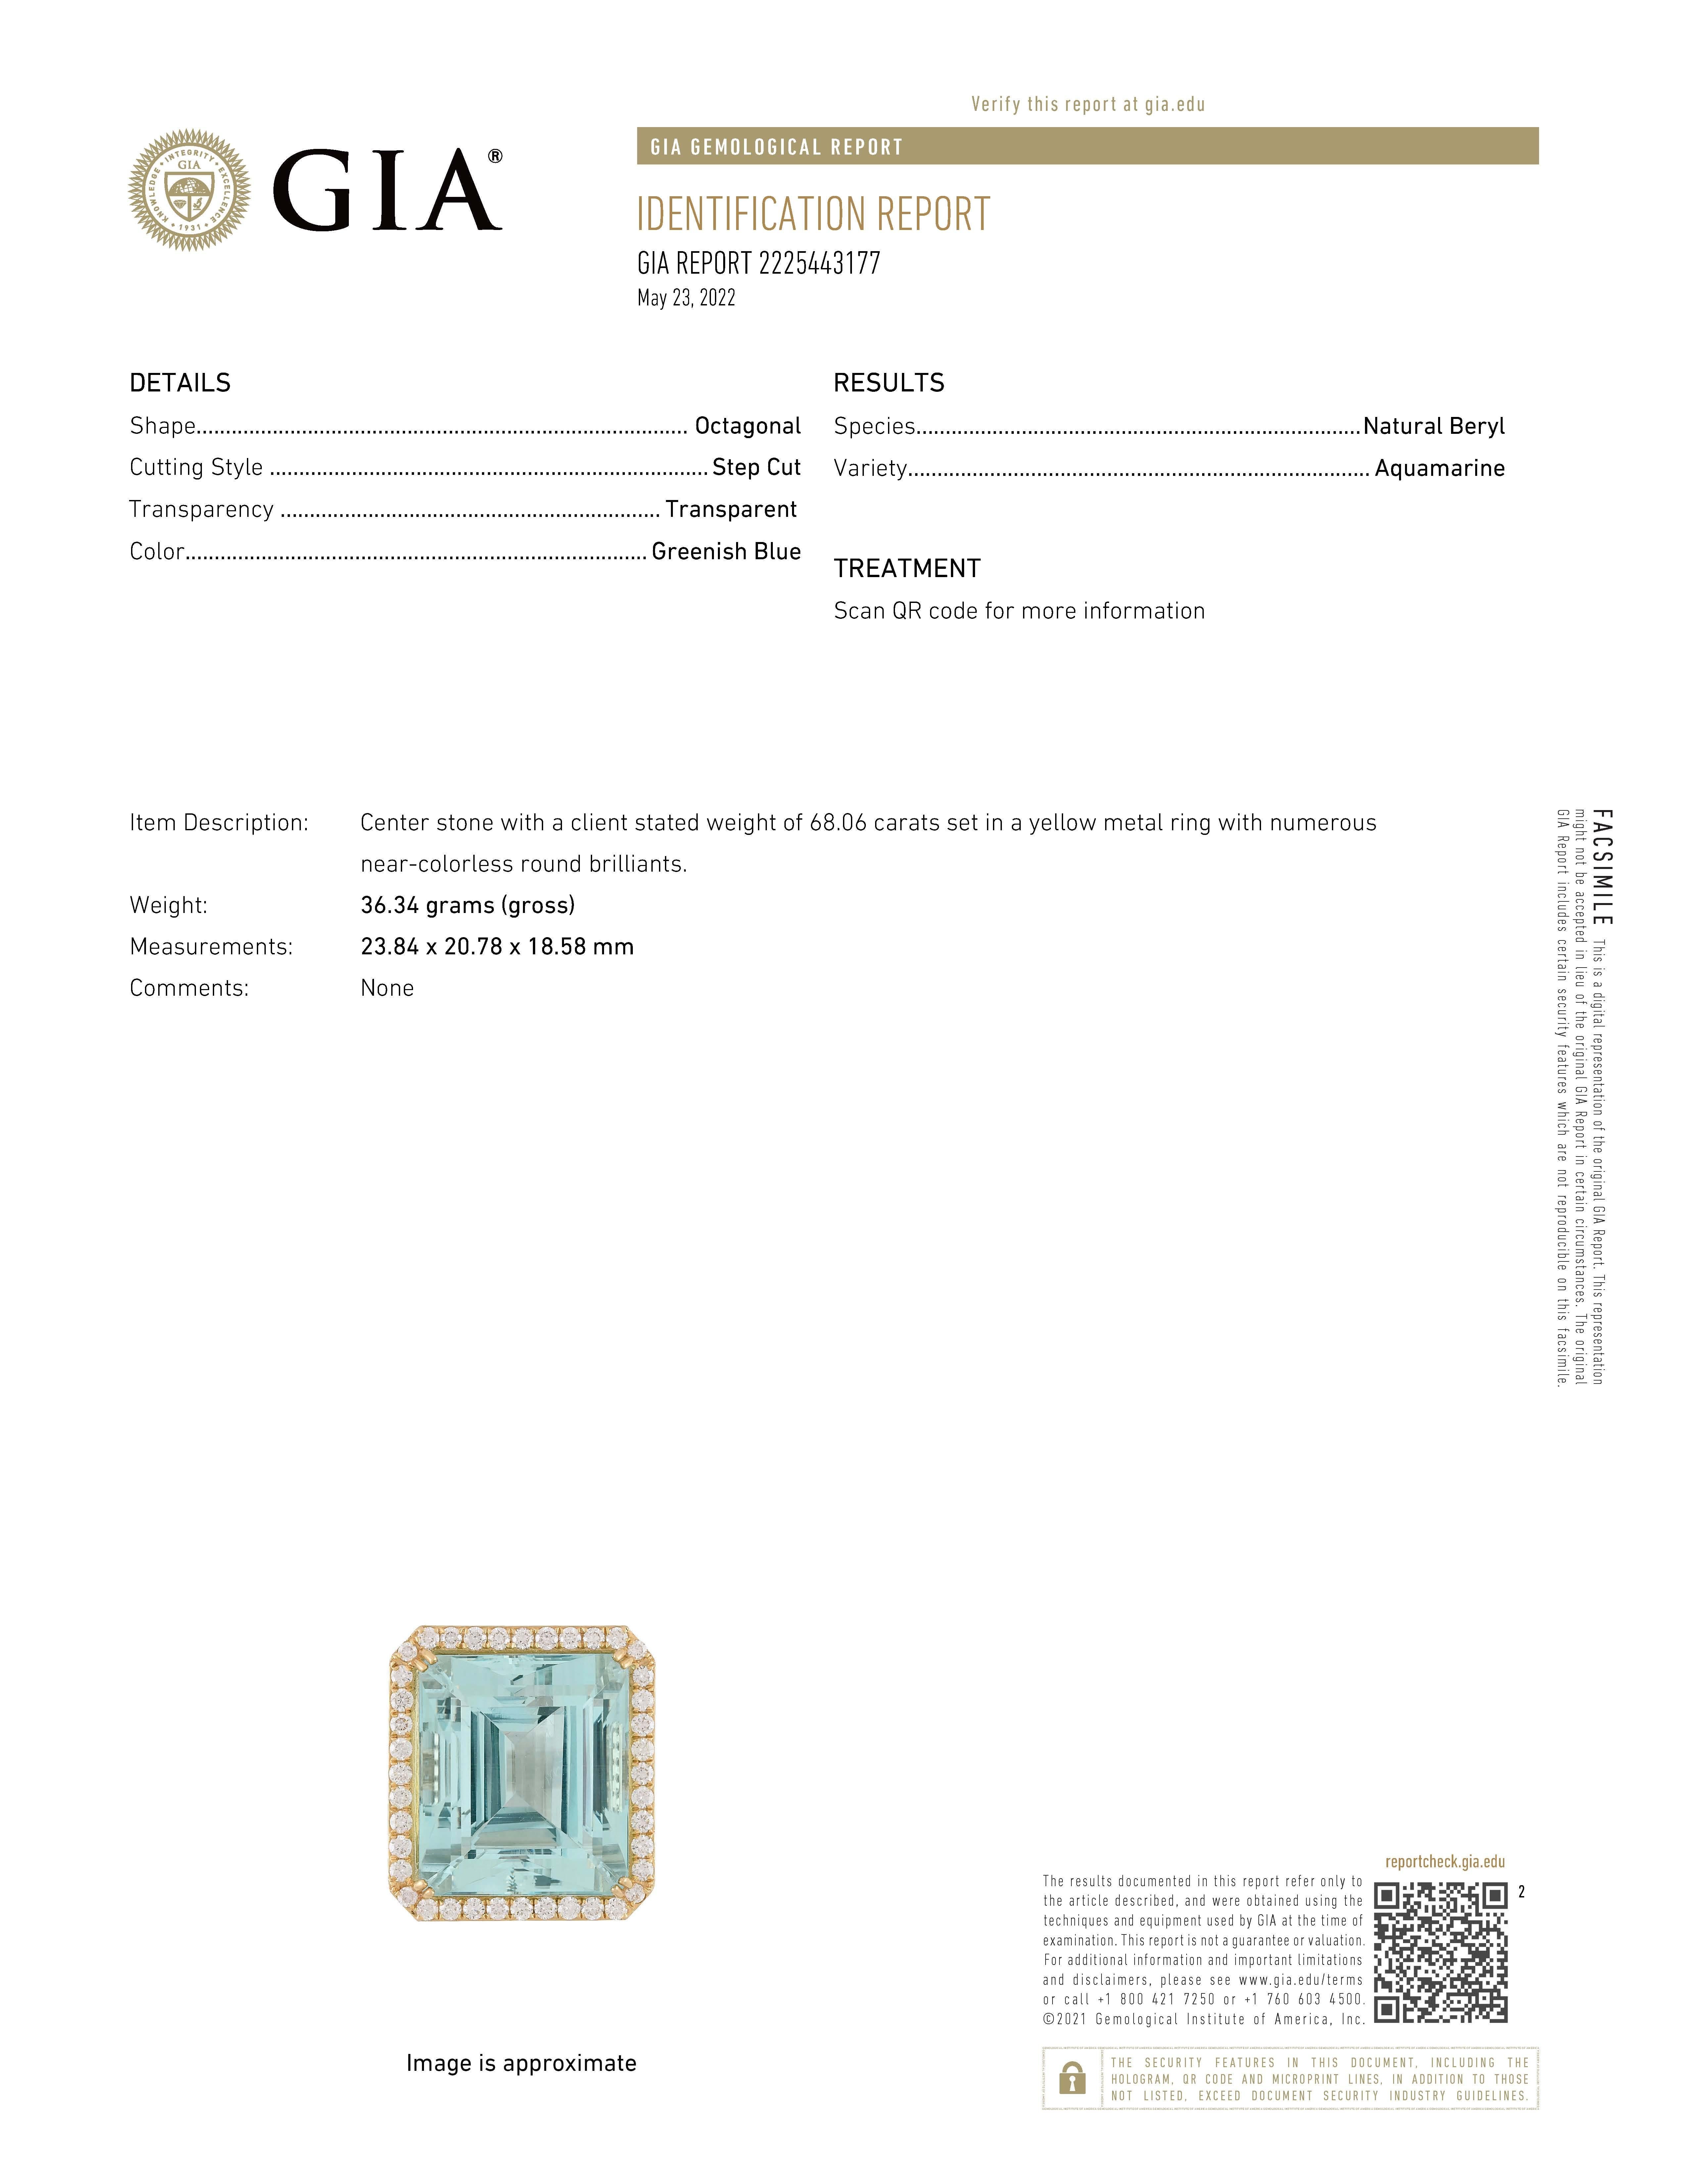 Women's GIA Certified 68.06 Carat Aquamarine Diamond Ring For Sale